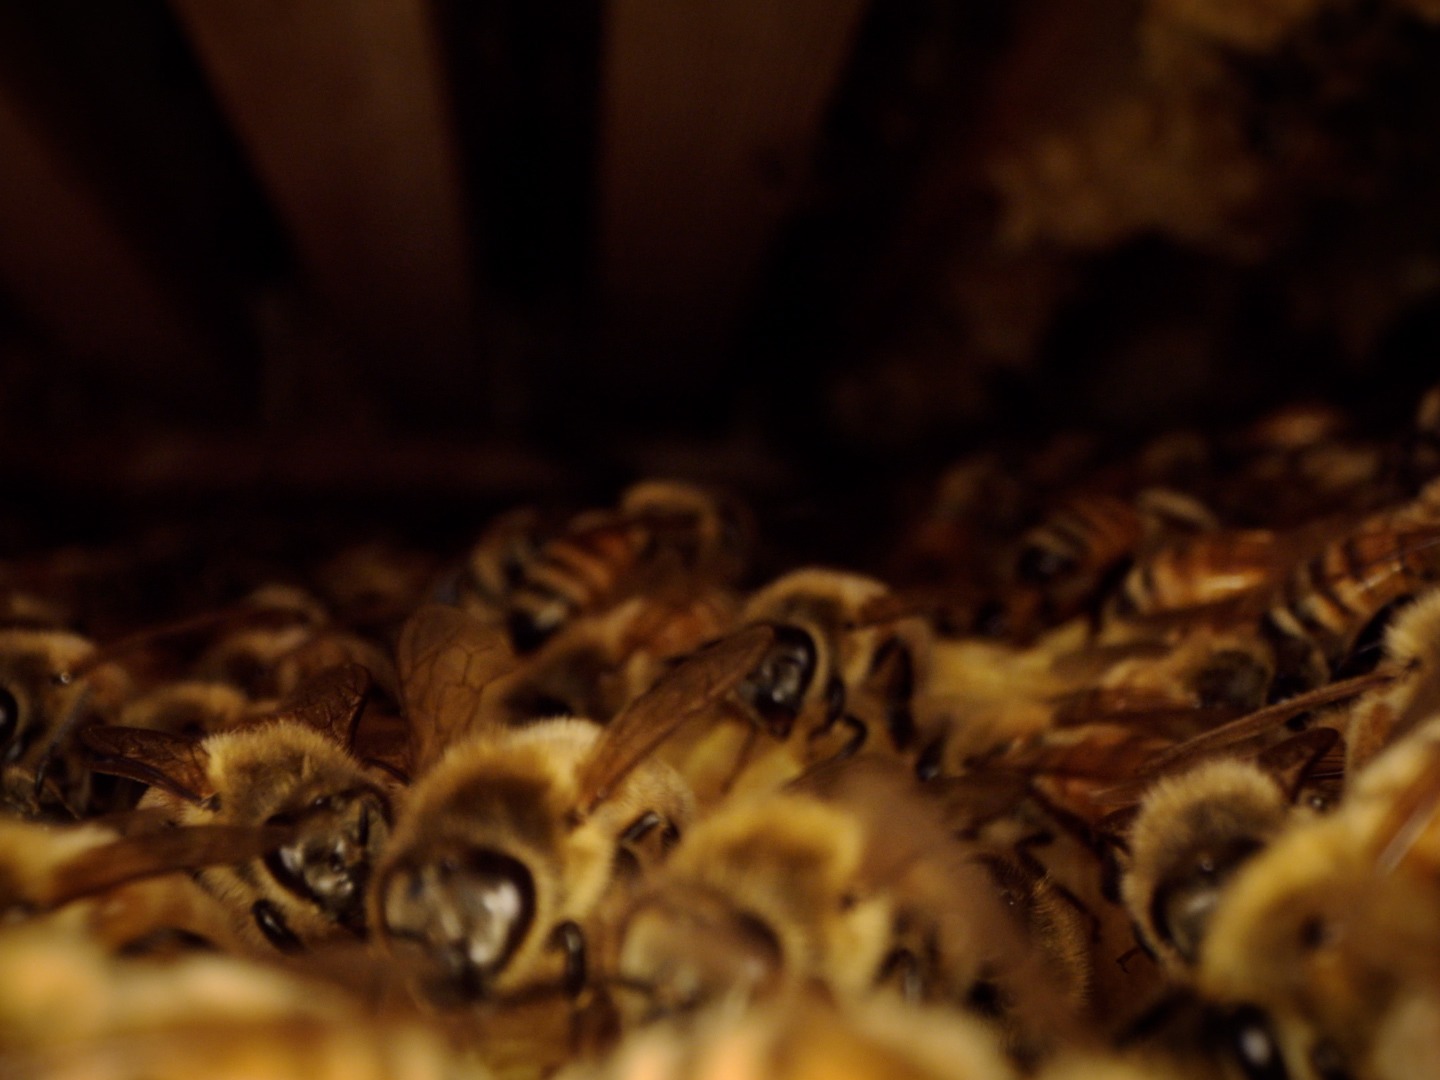 Bees inside their nest